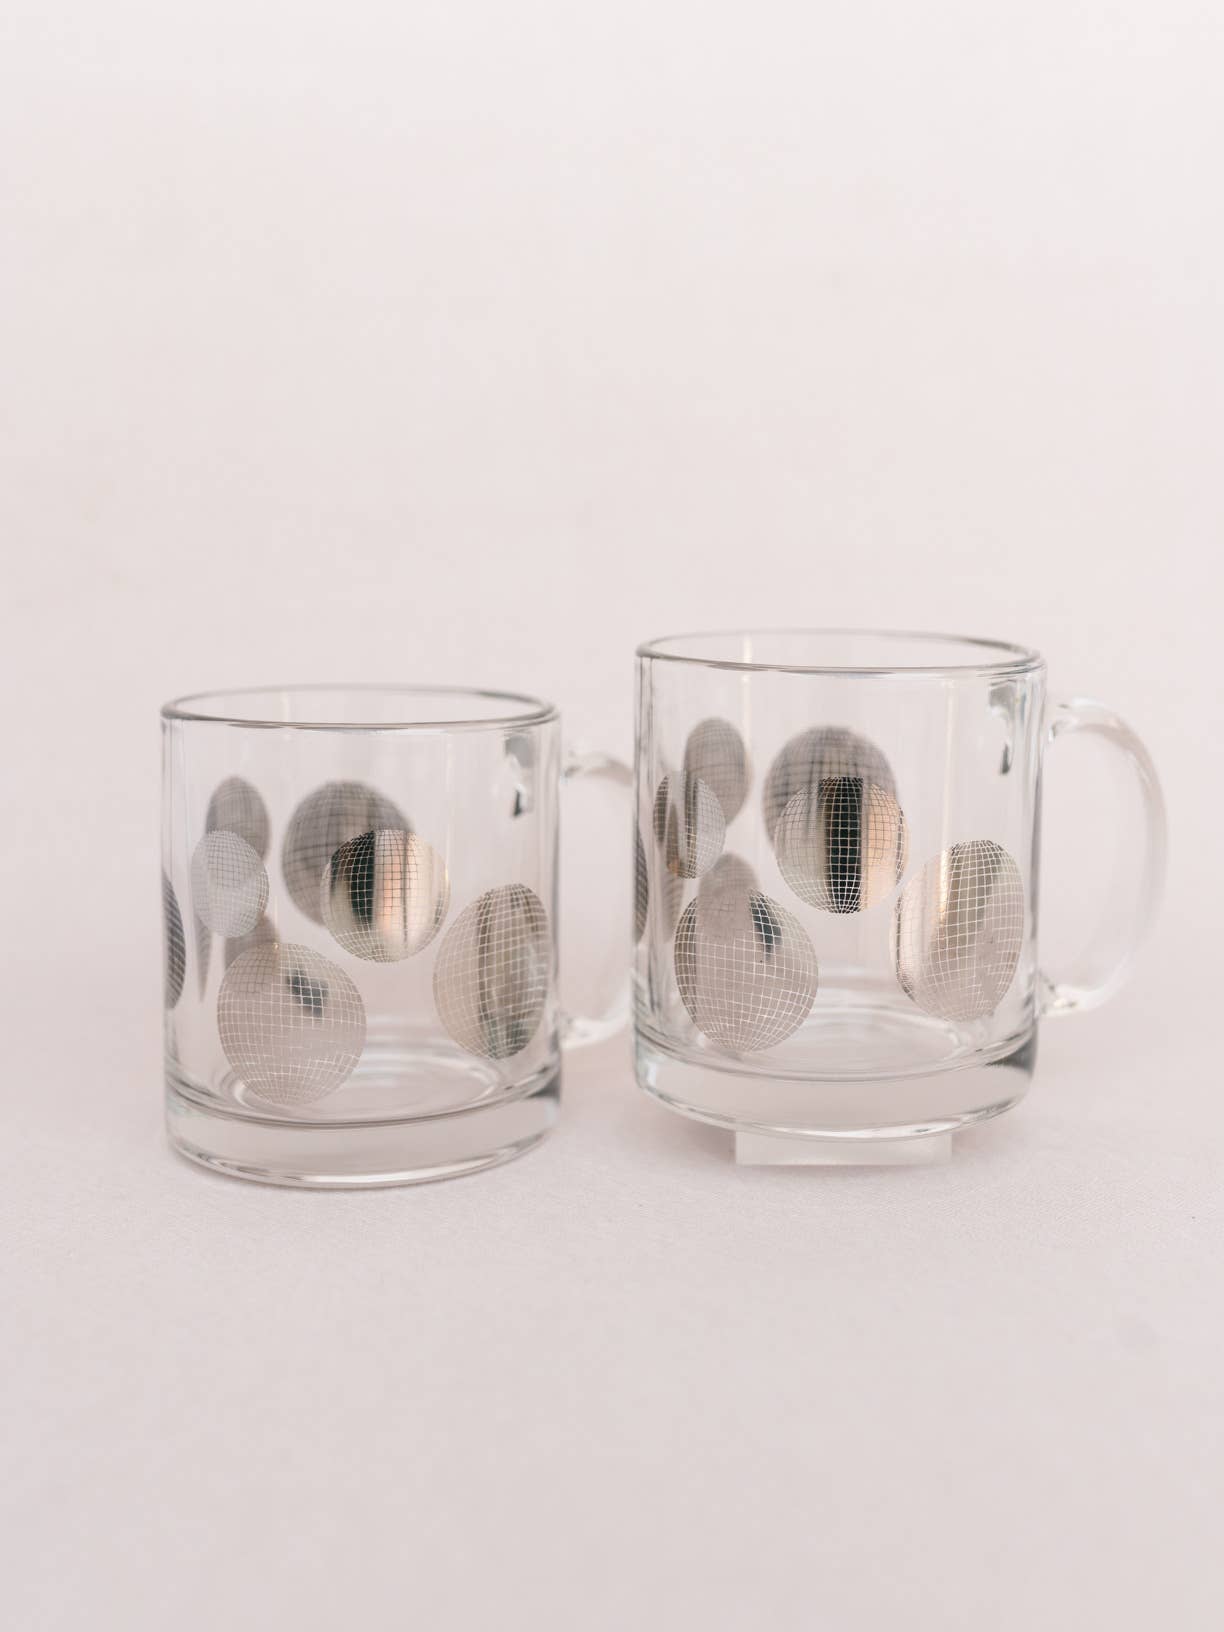 Disco Ball Silver Clear Glass Mug - Time's Reel